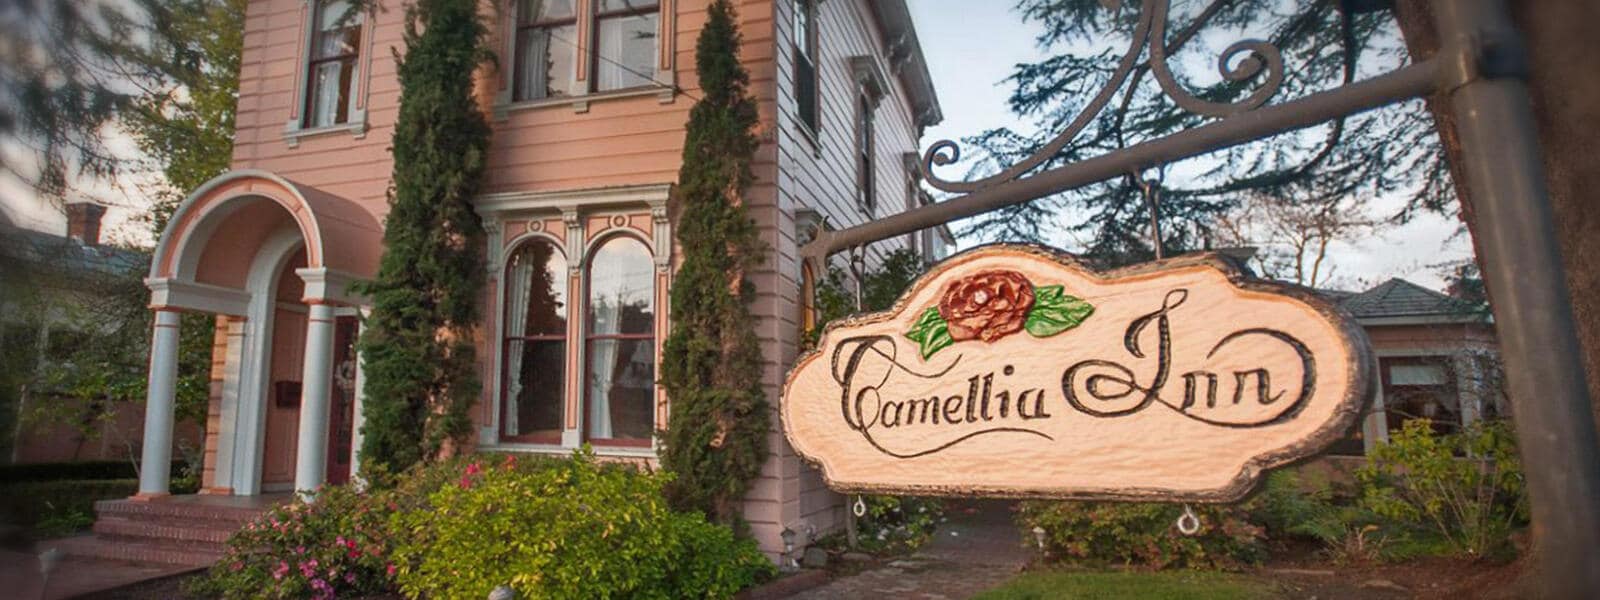 Camellia Inn Healdsburg Bed & Breakfast | Healdsburg Bed and Breakfast